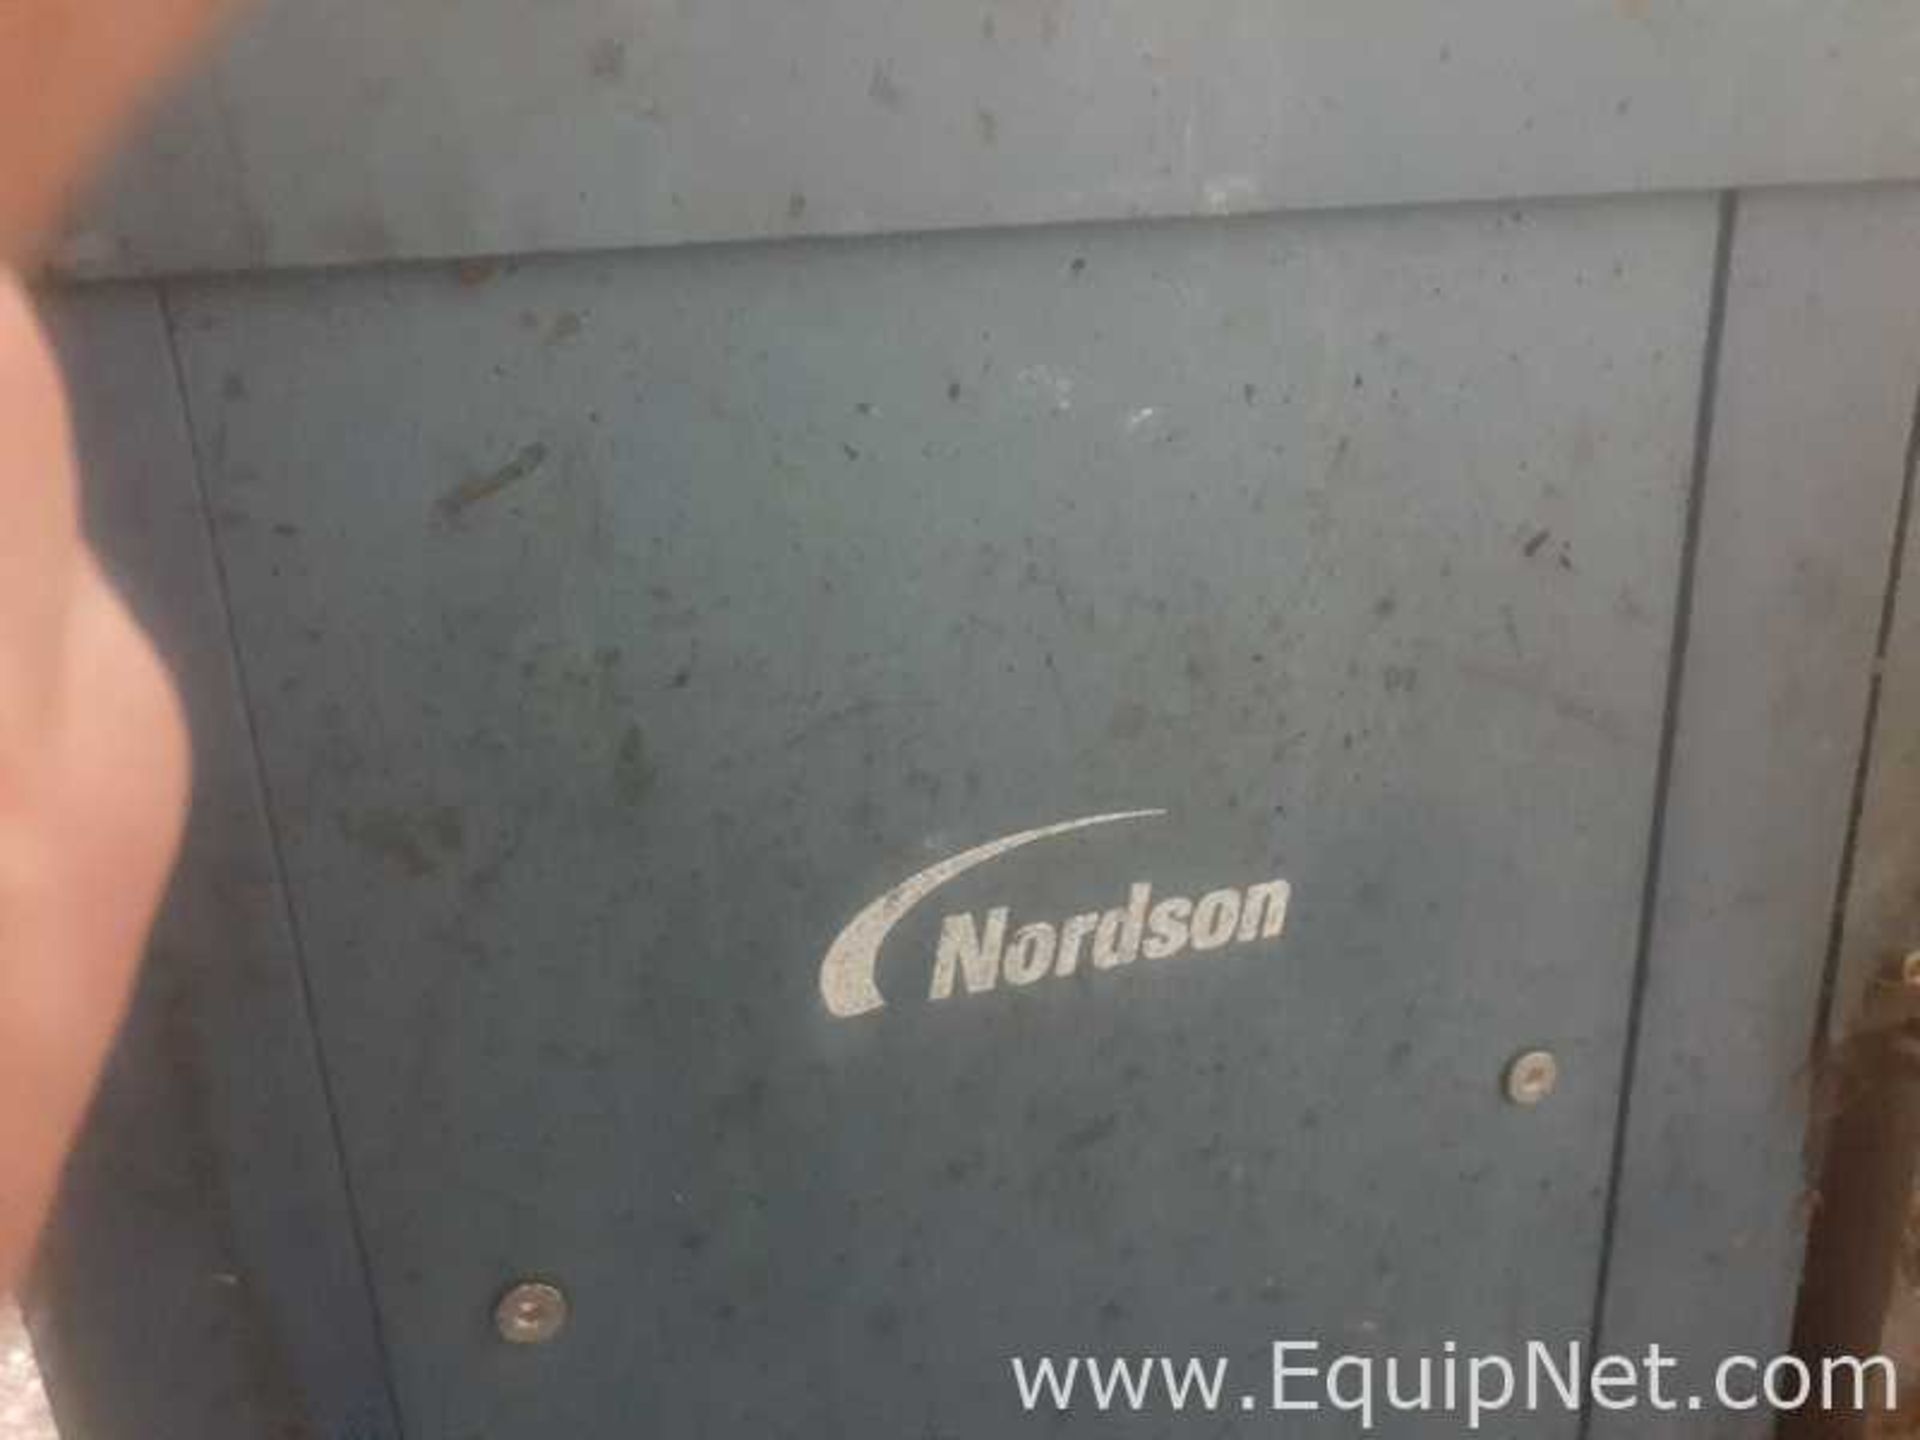 DESCRIPTION: Lot of 3 - Nordson ProBlue 15 Hotmelt Hot Glue Injection MachinesCustomer reports - Image 16 of 16